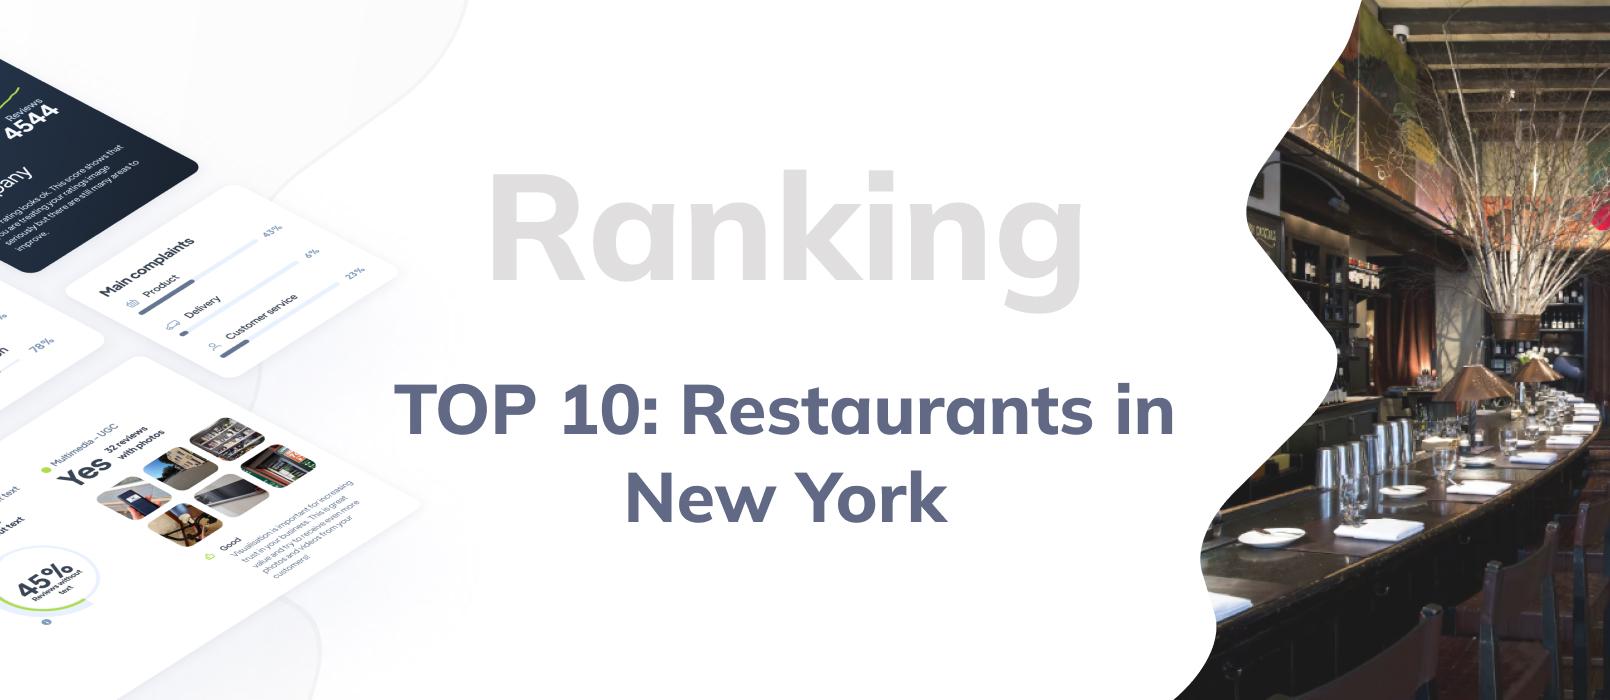 Restaurants in New York - ranking TOP 10